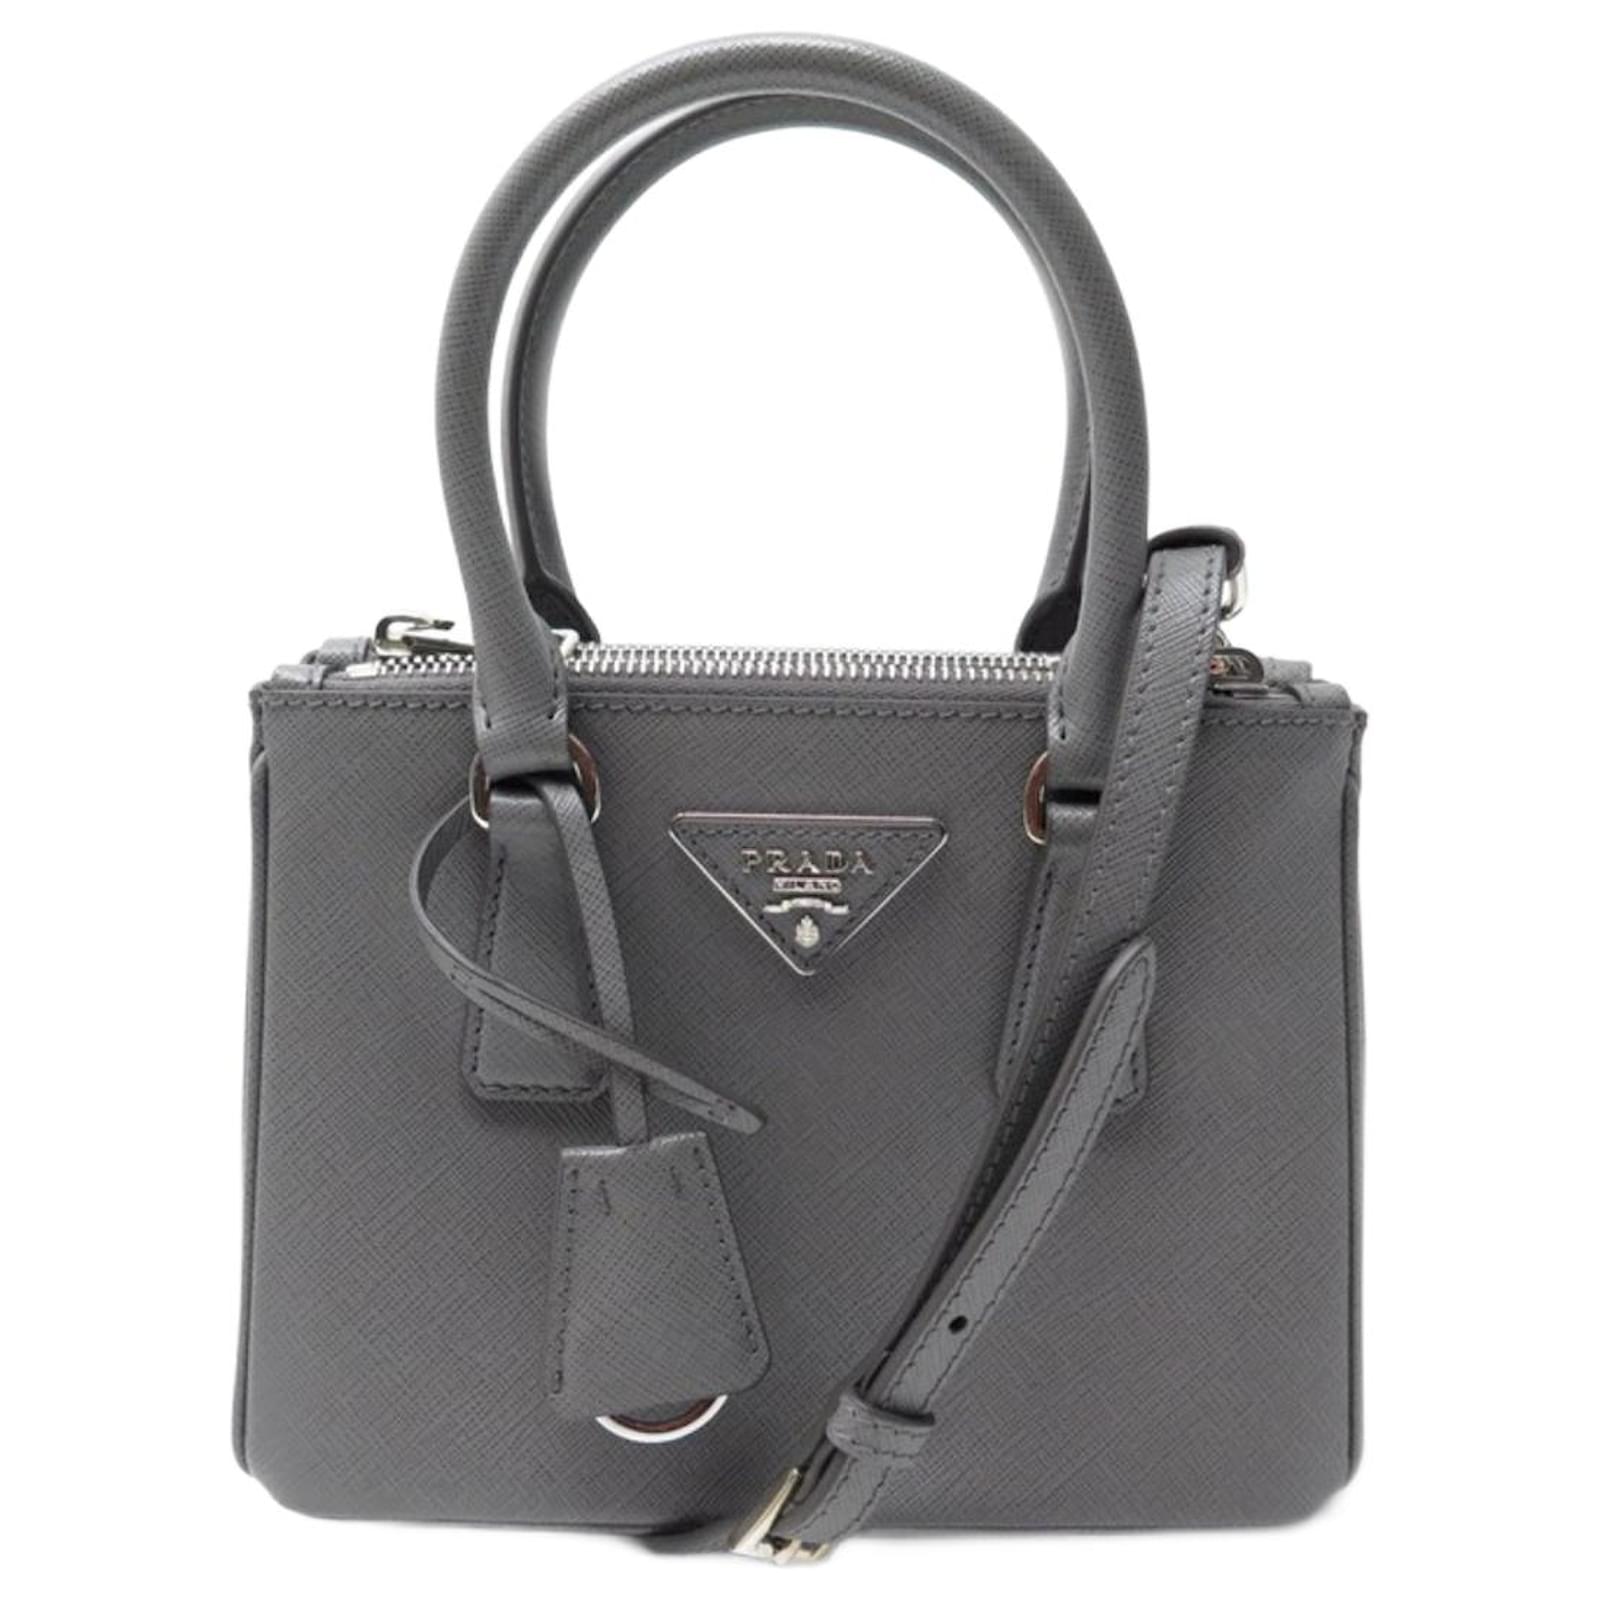 Prada Galleria Mini Saffiano Leather Bag in Black